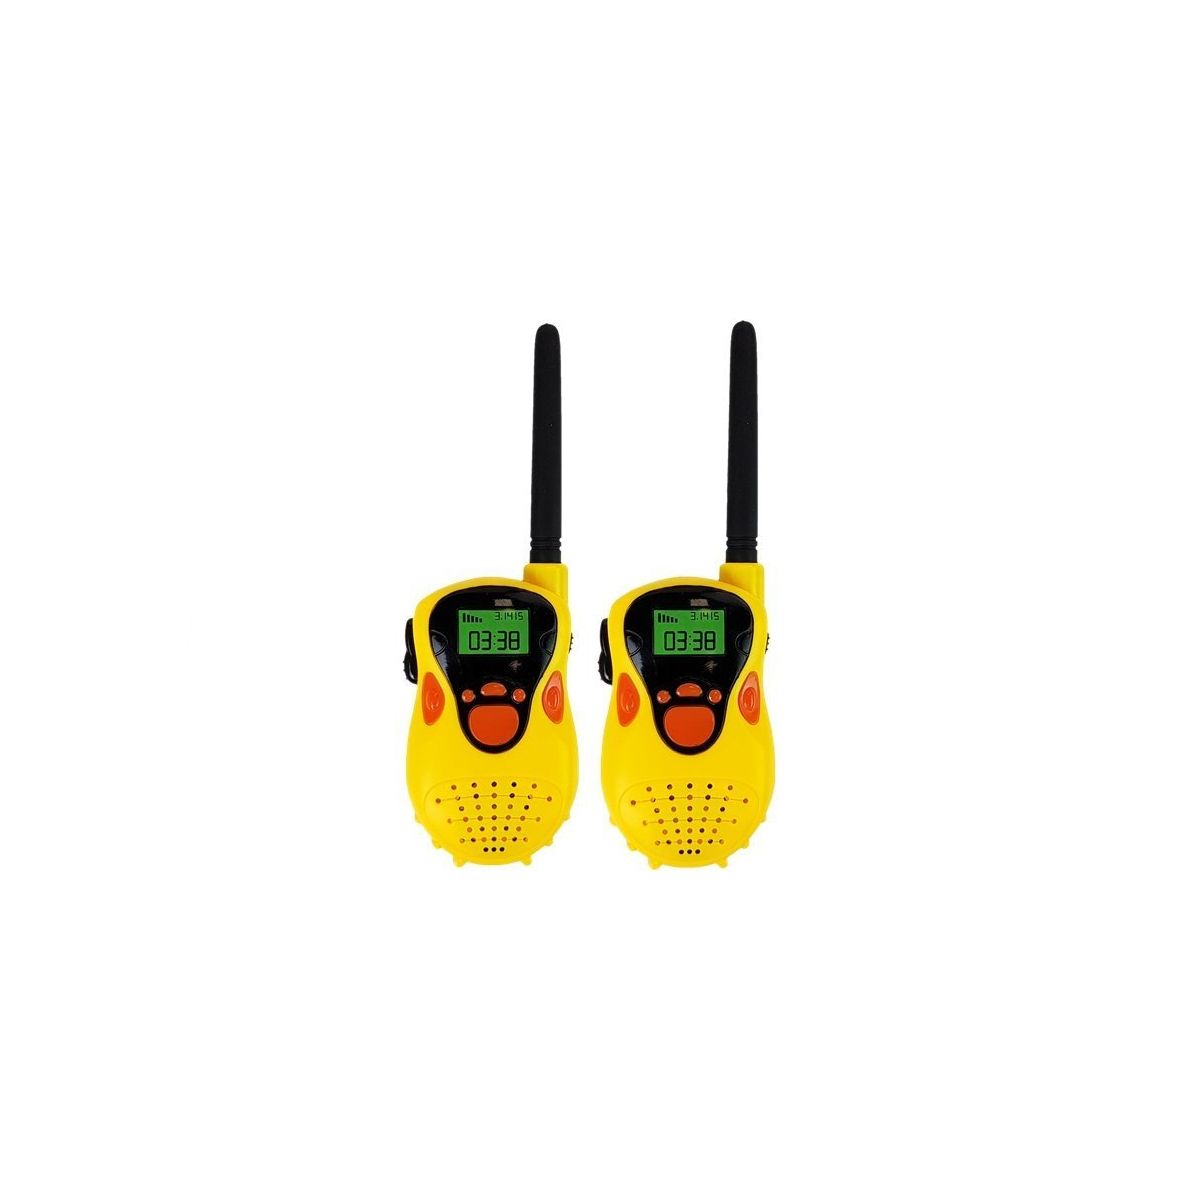 Walkie-talkie krótkofalówki 100m żółte Lean (7605)